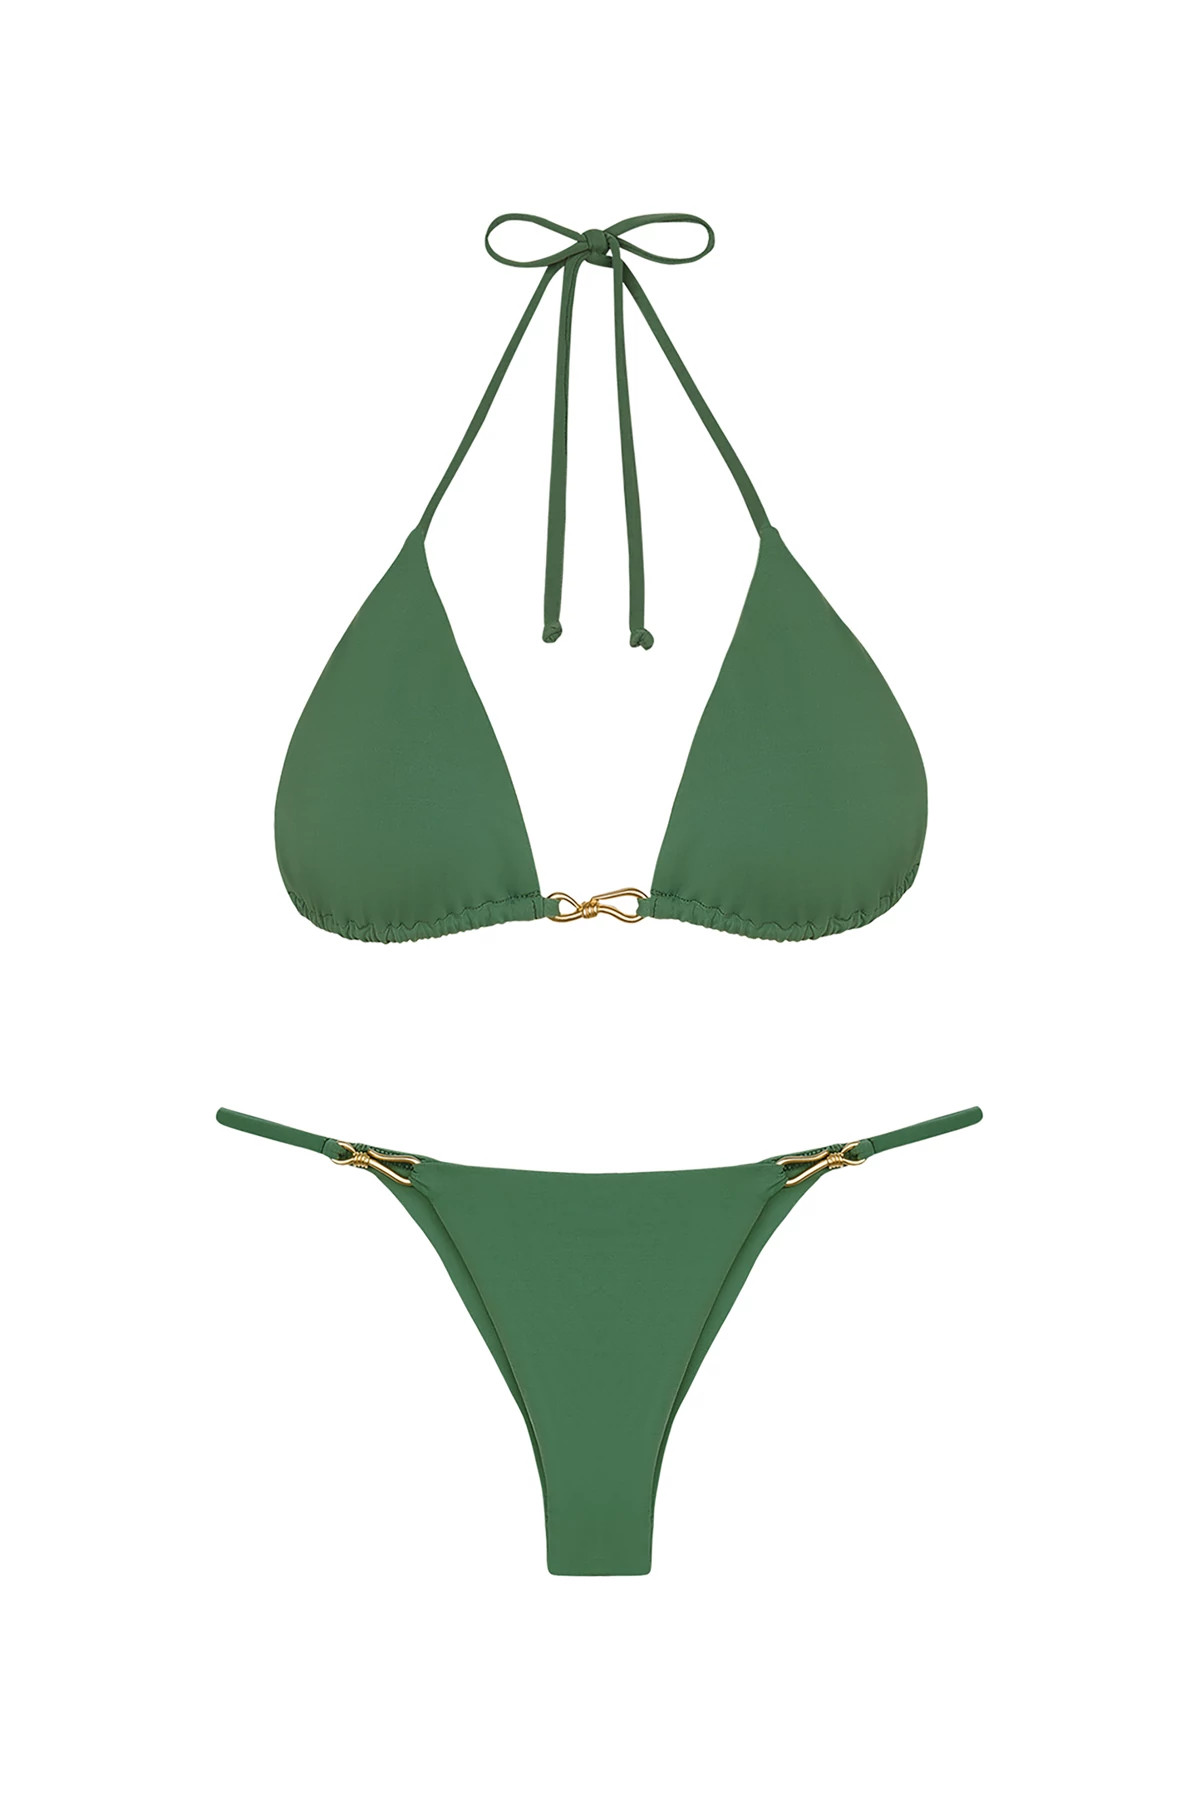 ASPEN Sienna Triangle Bikini Top image number 3